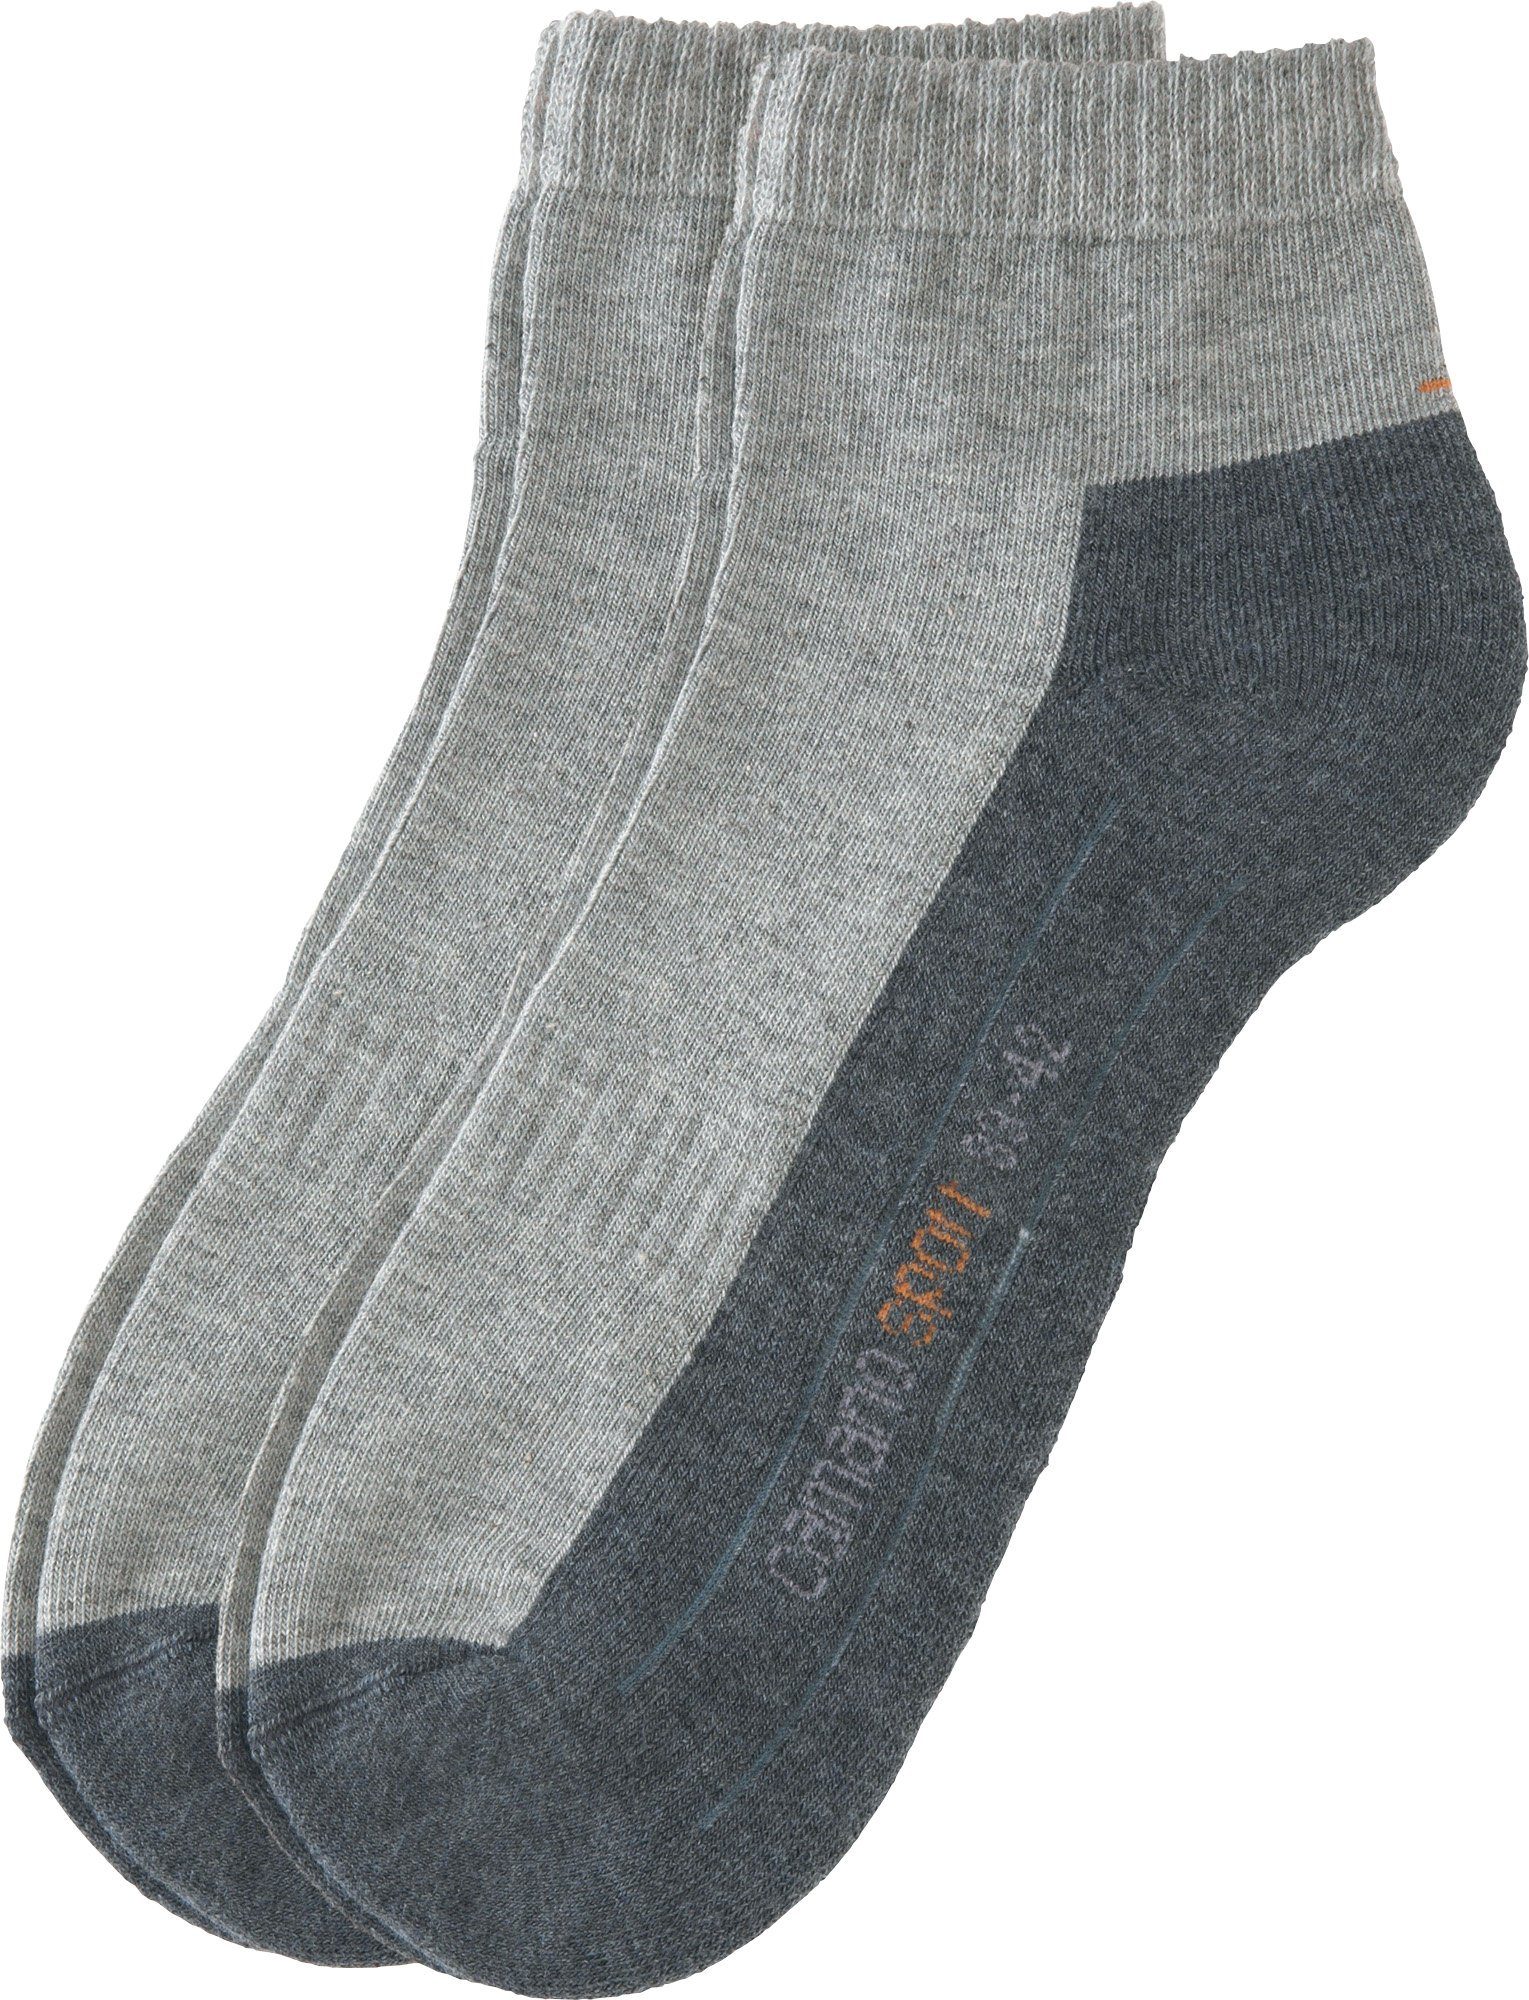 Paar Uni hellgrau Camano Unisex-Sport-Kurzsocken Socken 2